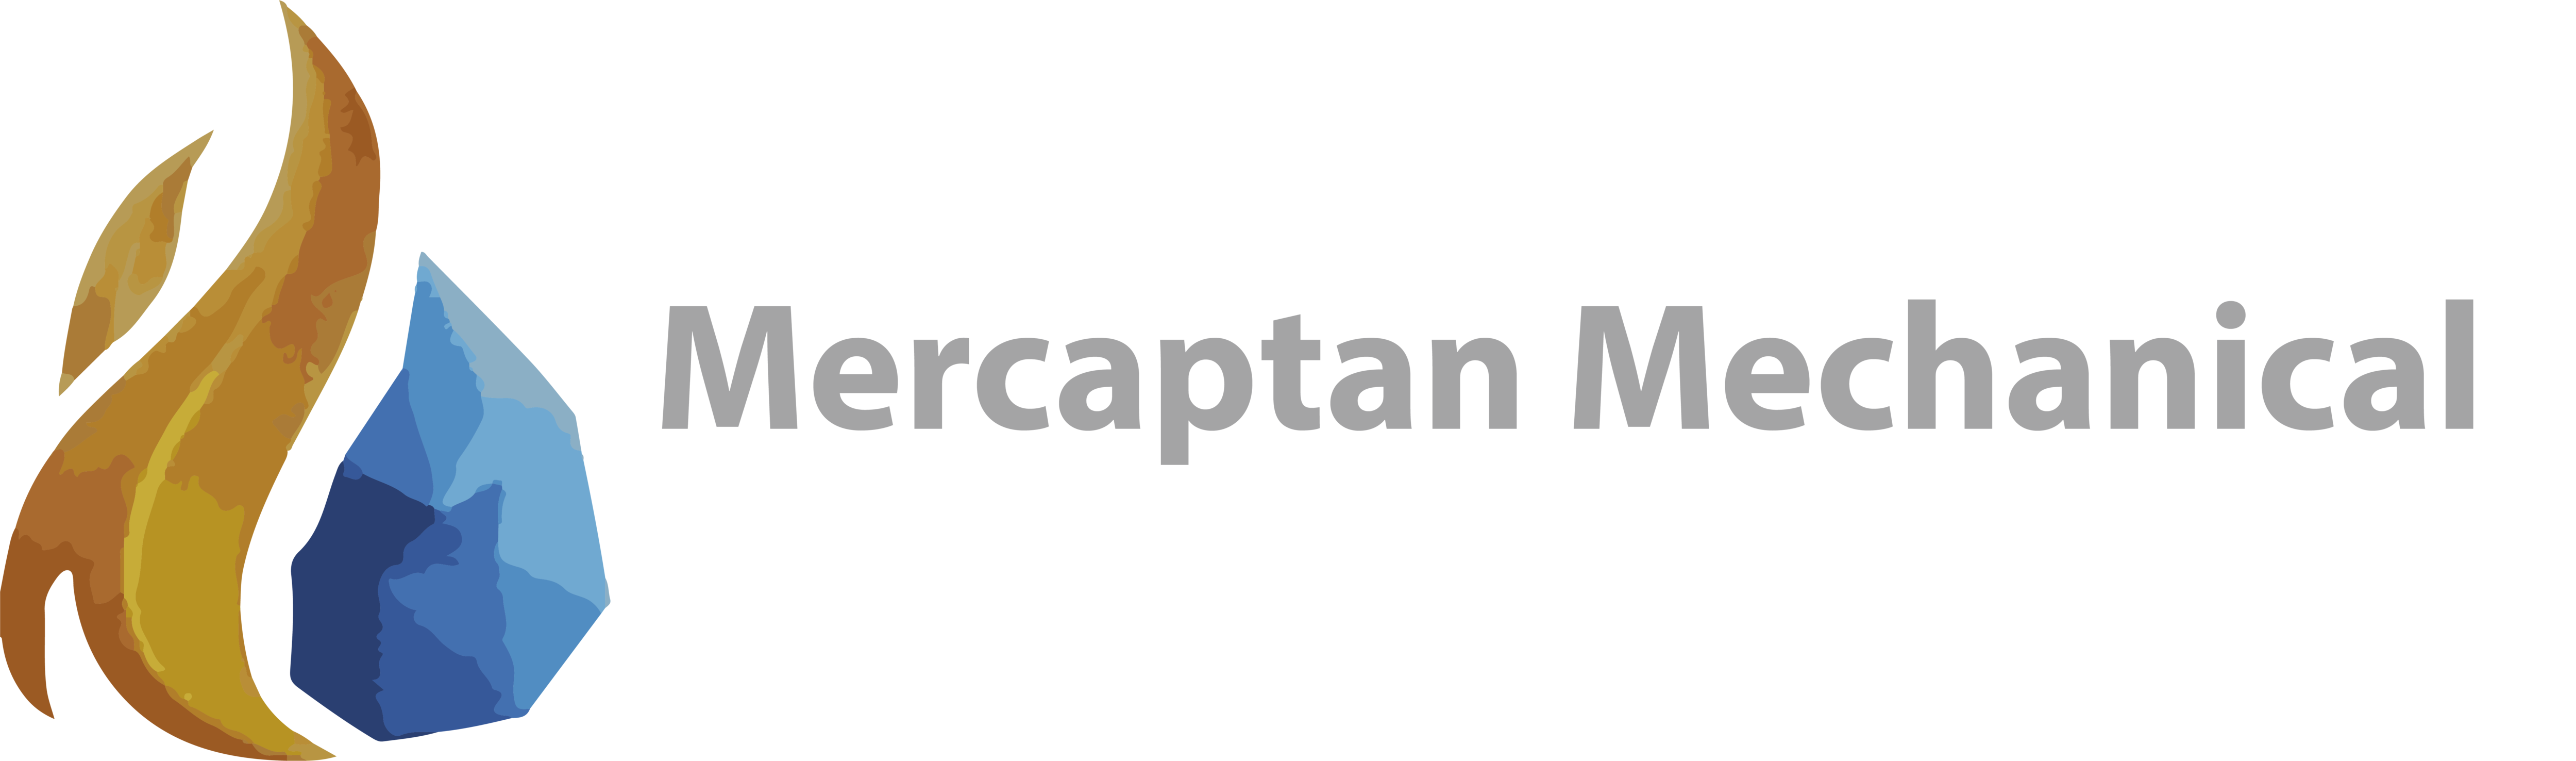 Mercaptan Mechanical